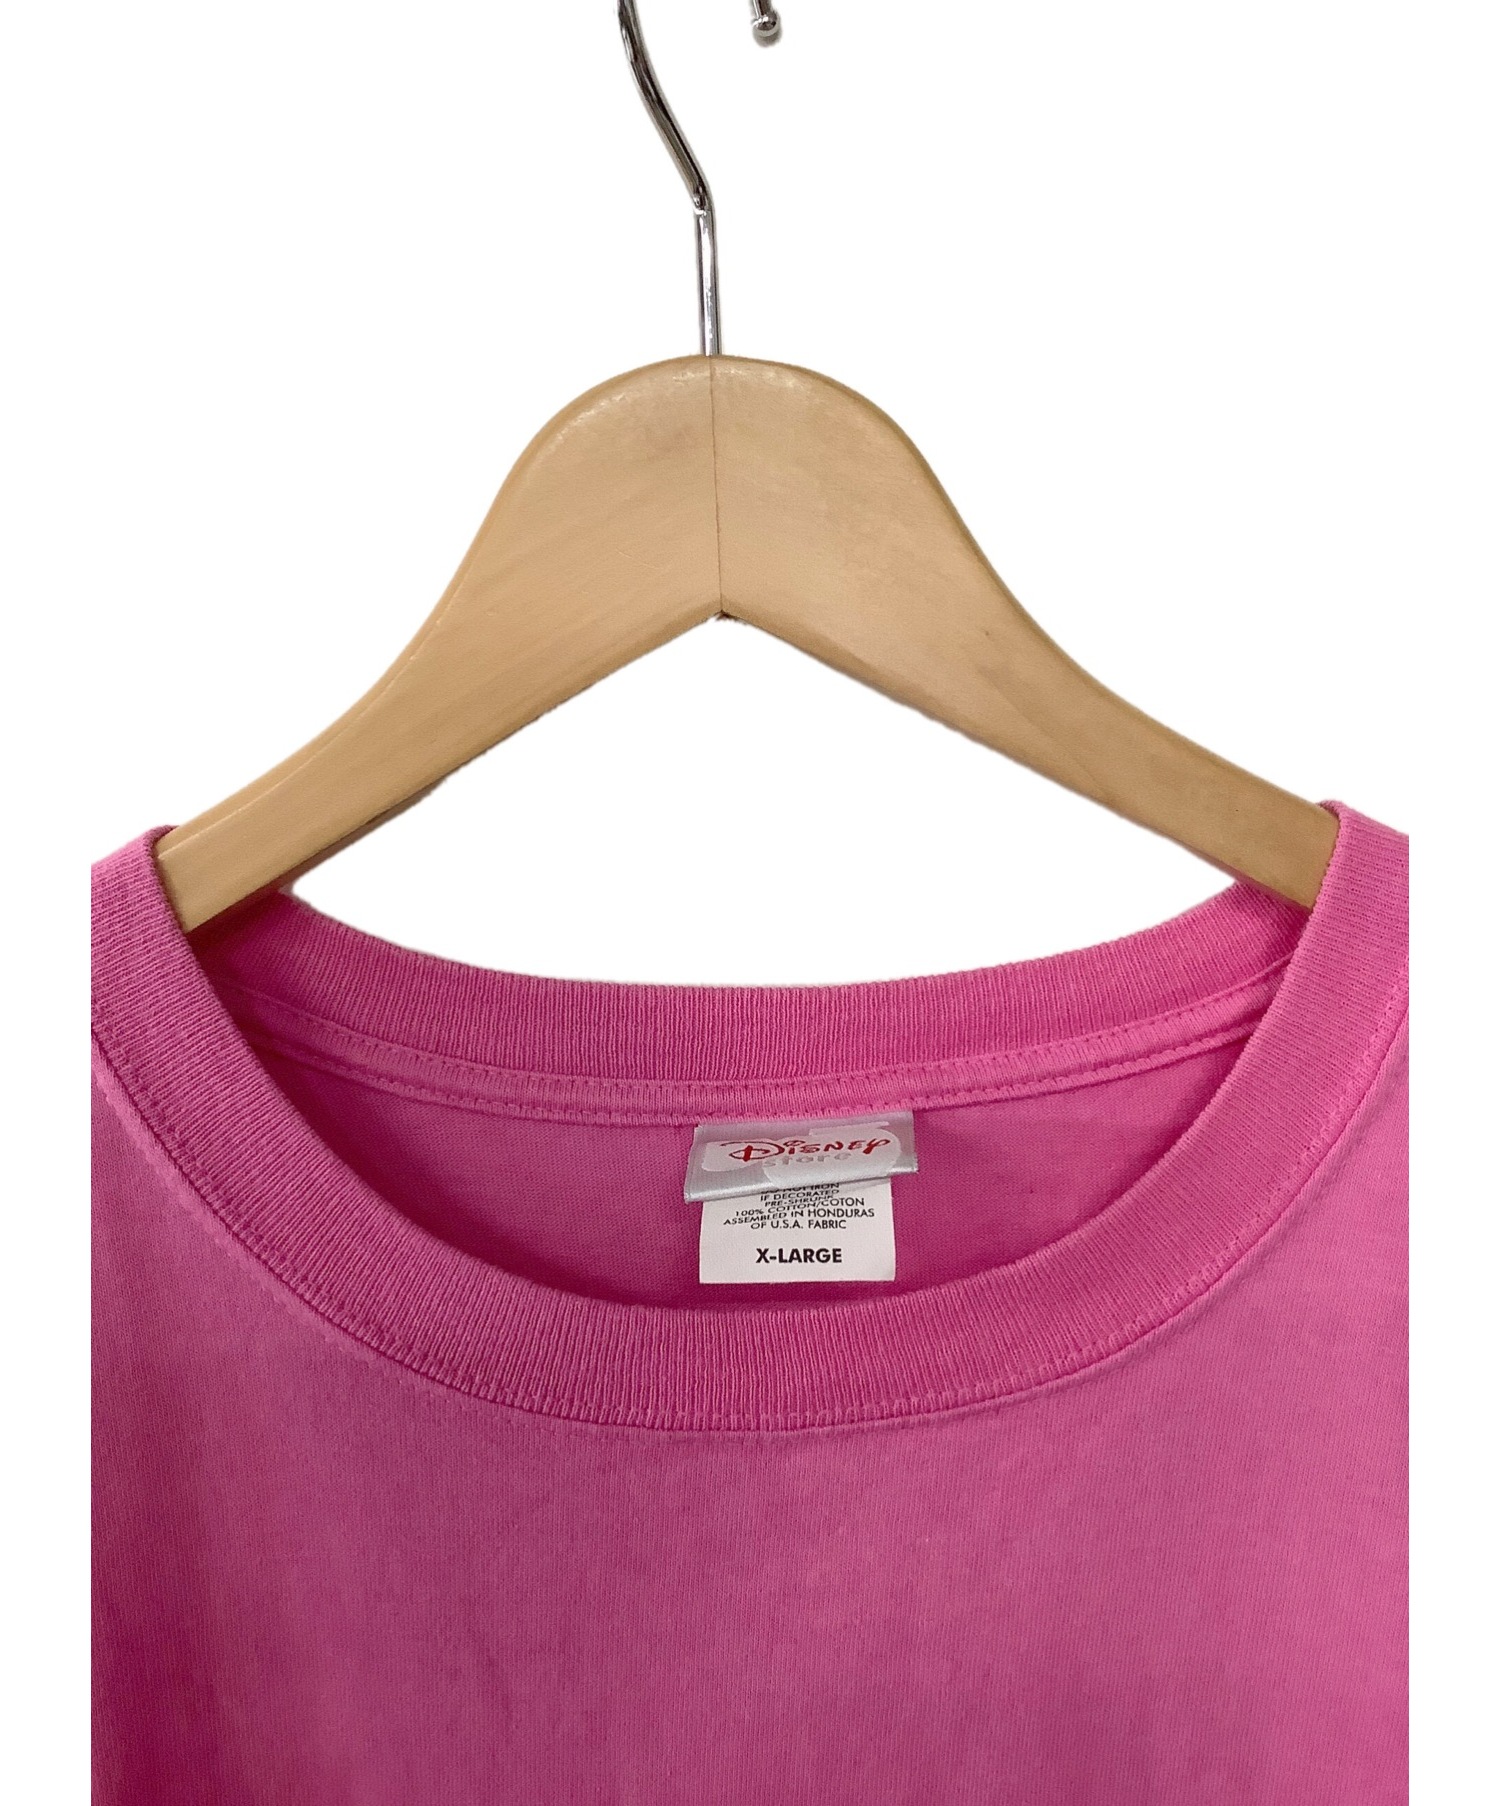 DISNEY (ディズニー) Tシャツ ピンク サイズ:XL